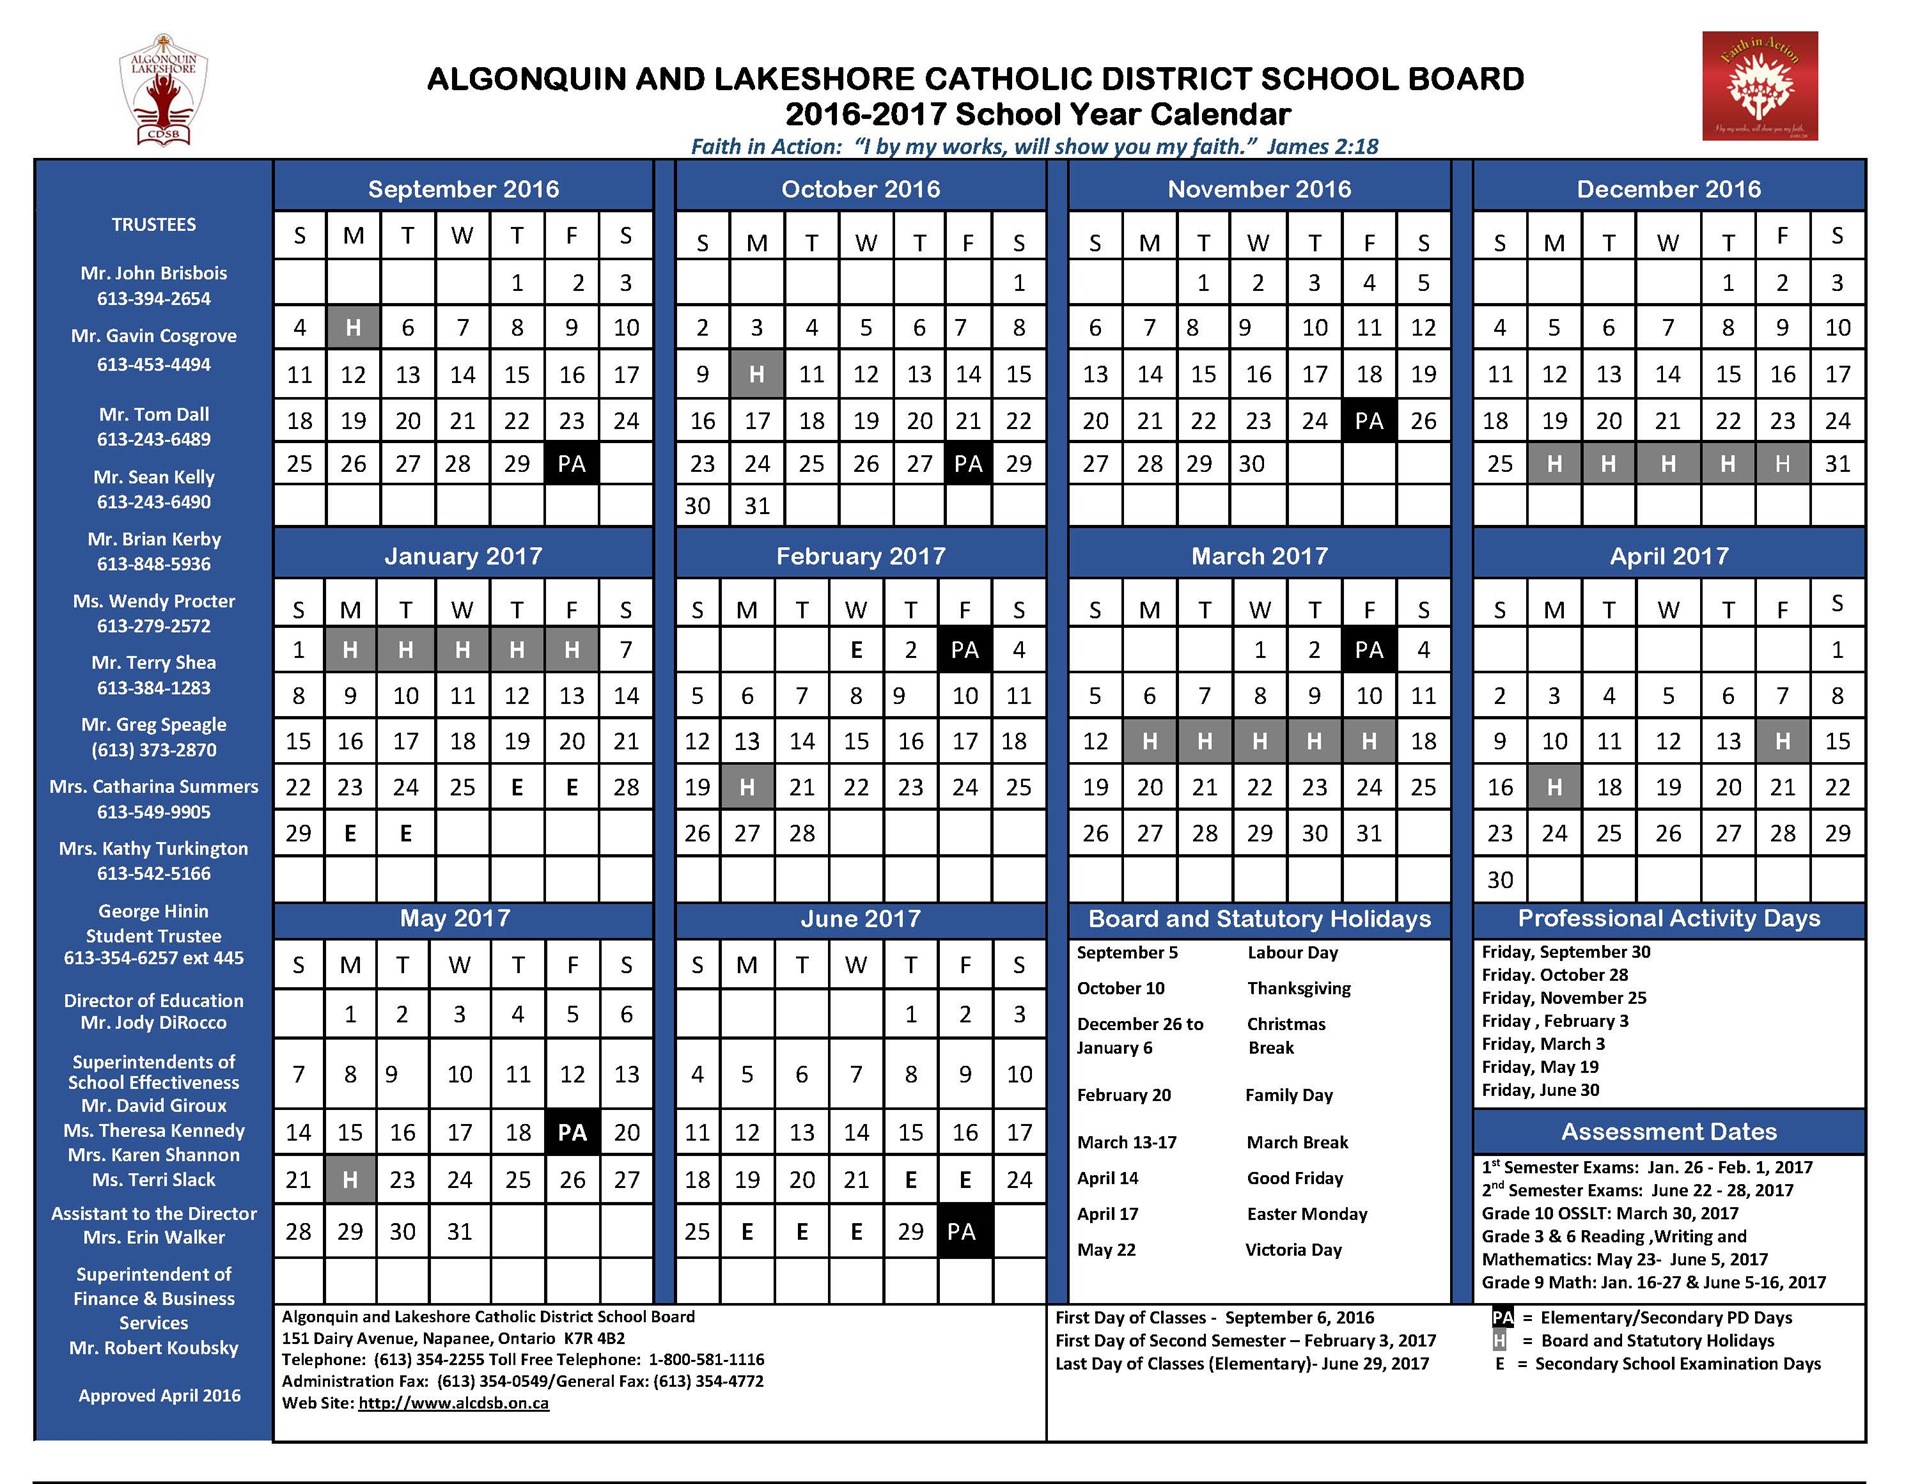 2016-2017 Board School Year Calendar June 2016.jpg